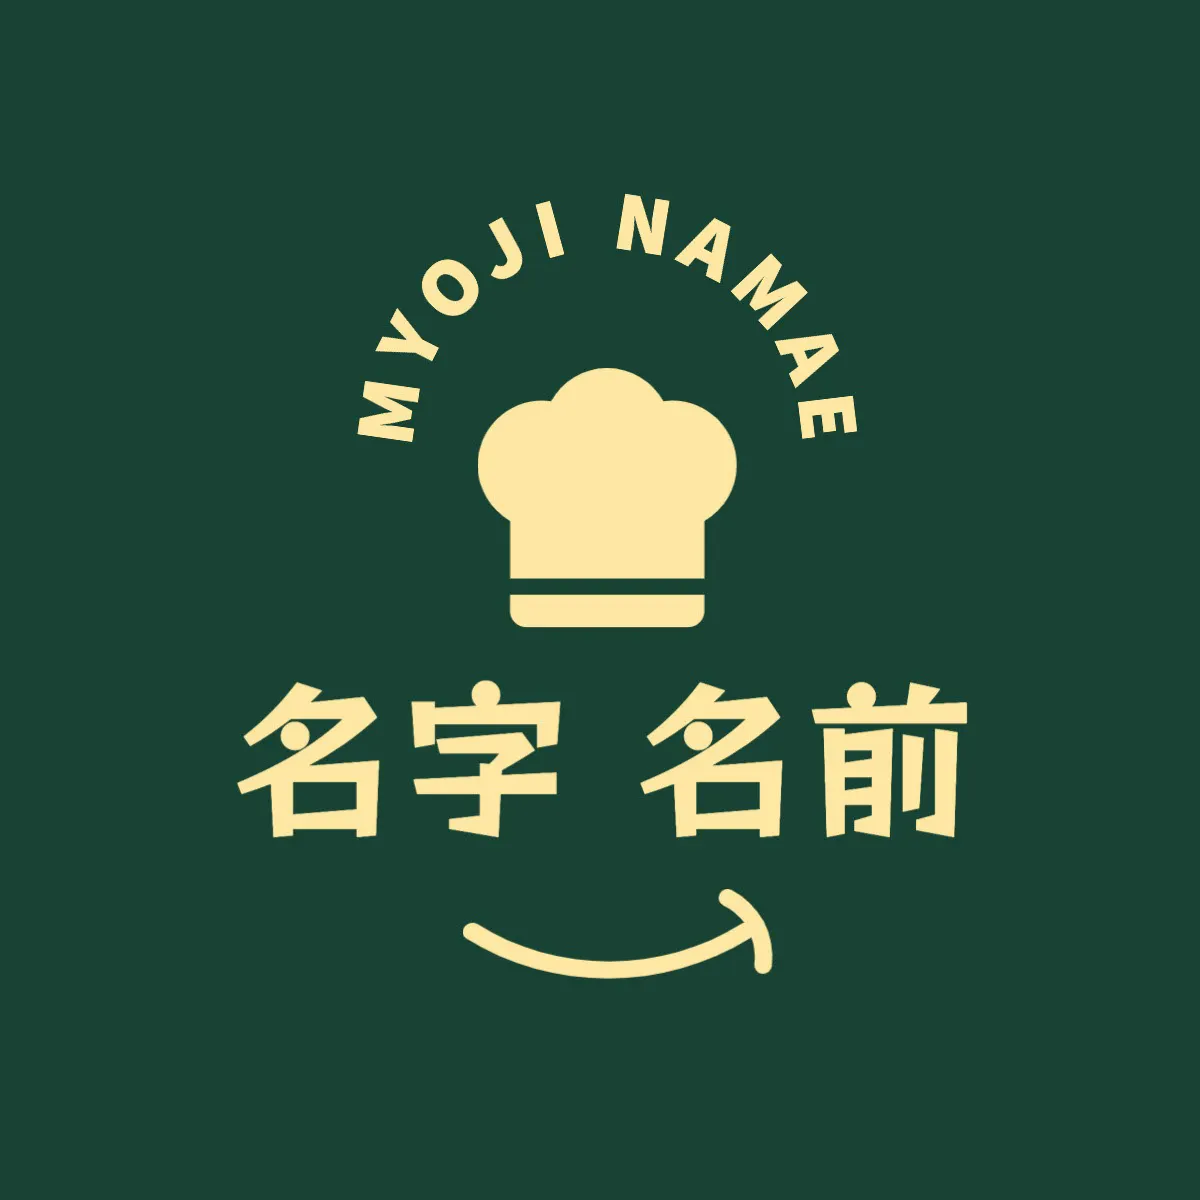 bakery name logo